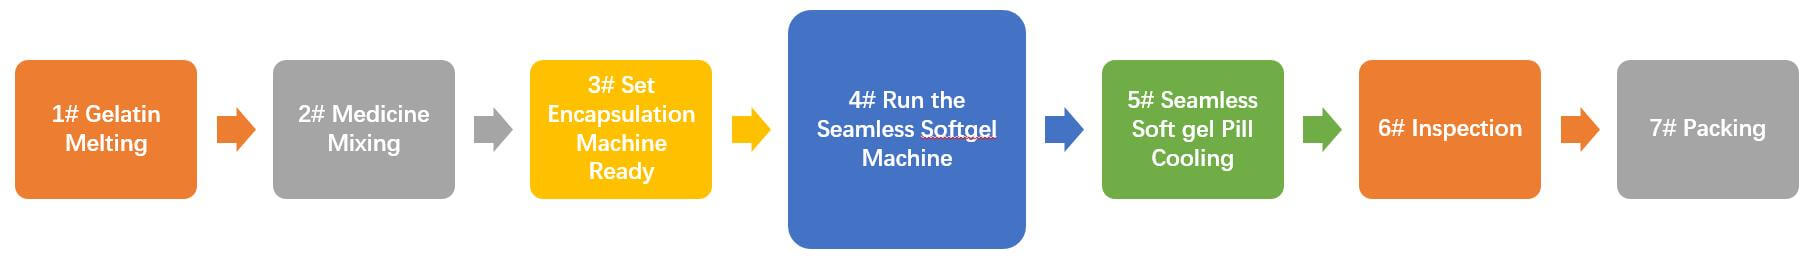 seamless-softgel-production-process